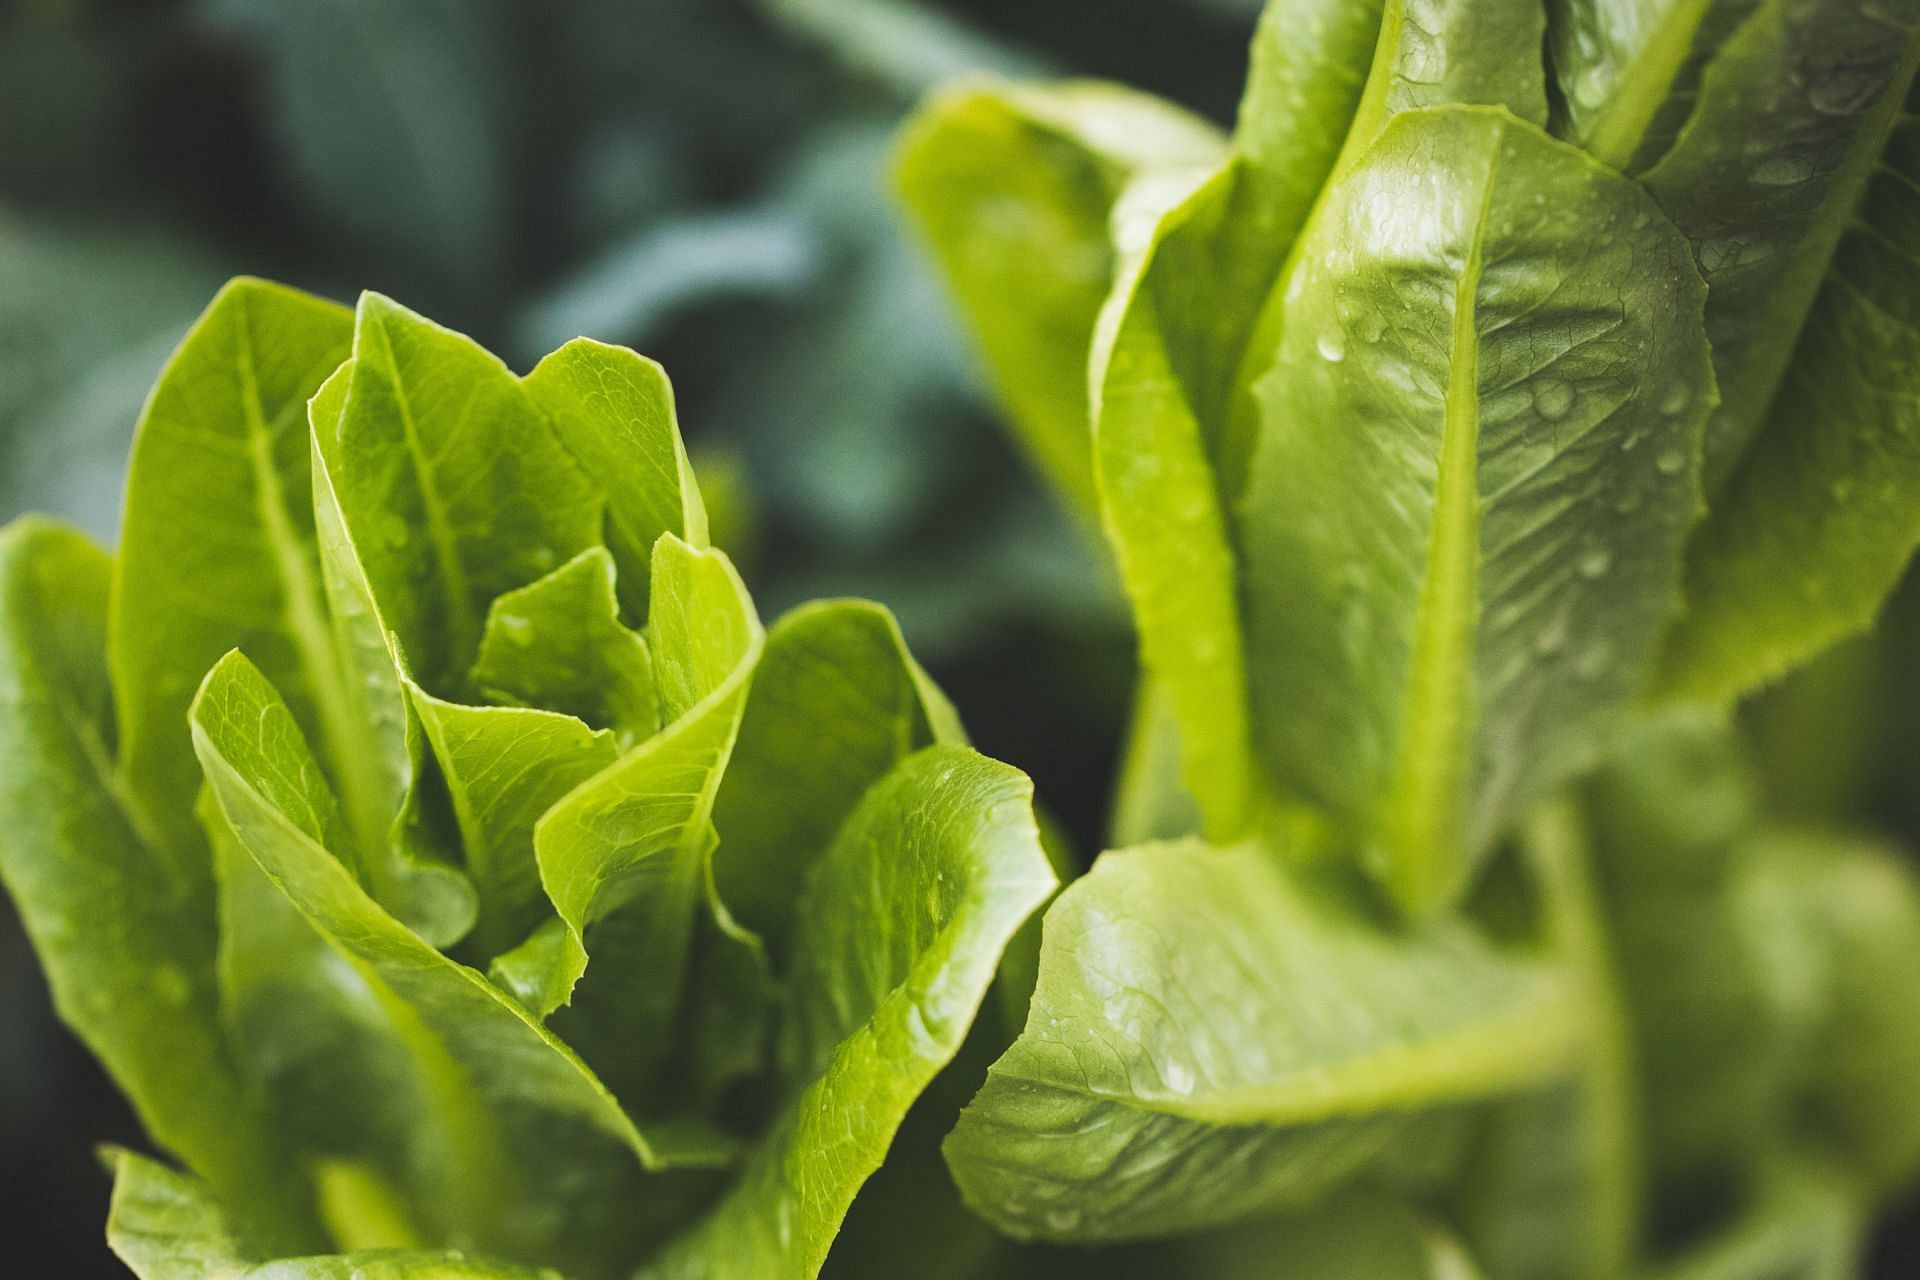 Romaine lettuce has anti-inflammatory properties. (Image via Unsplash/Stephanie Moody)